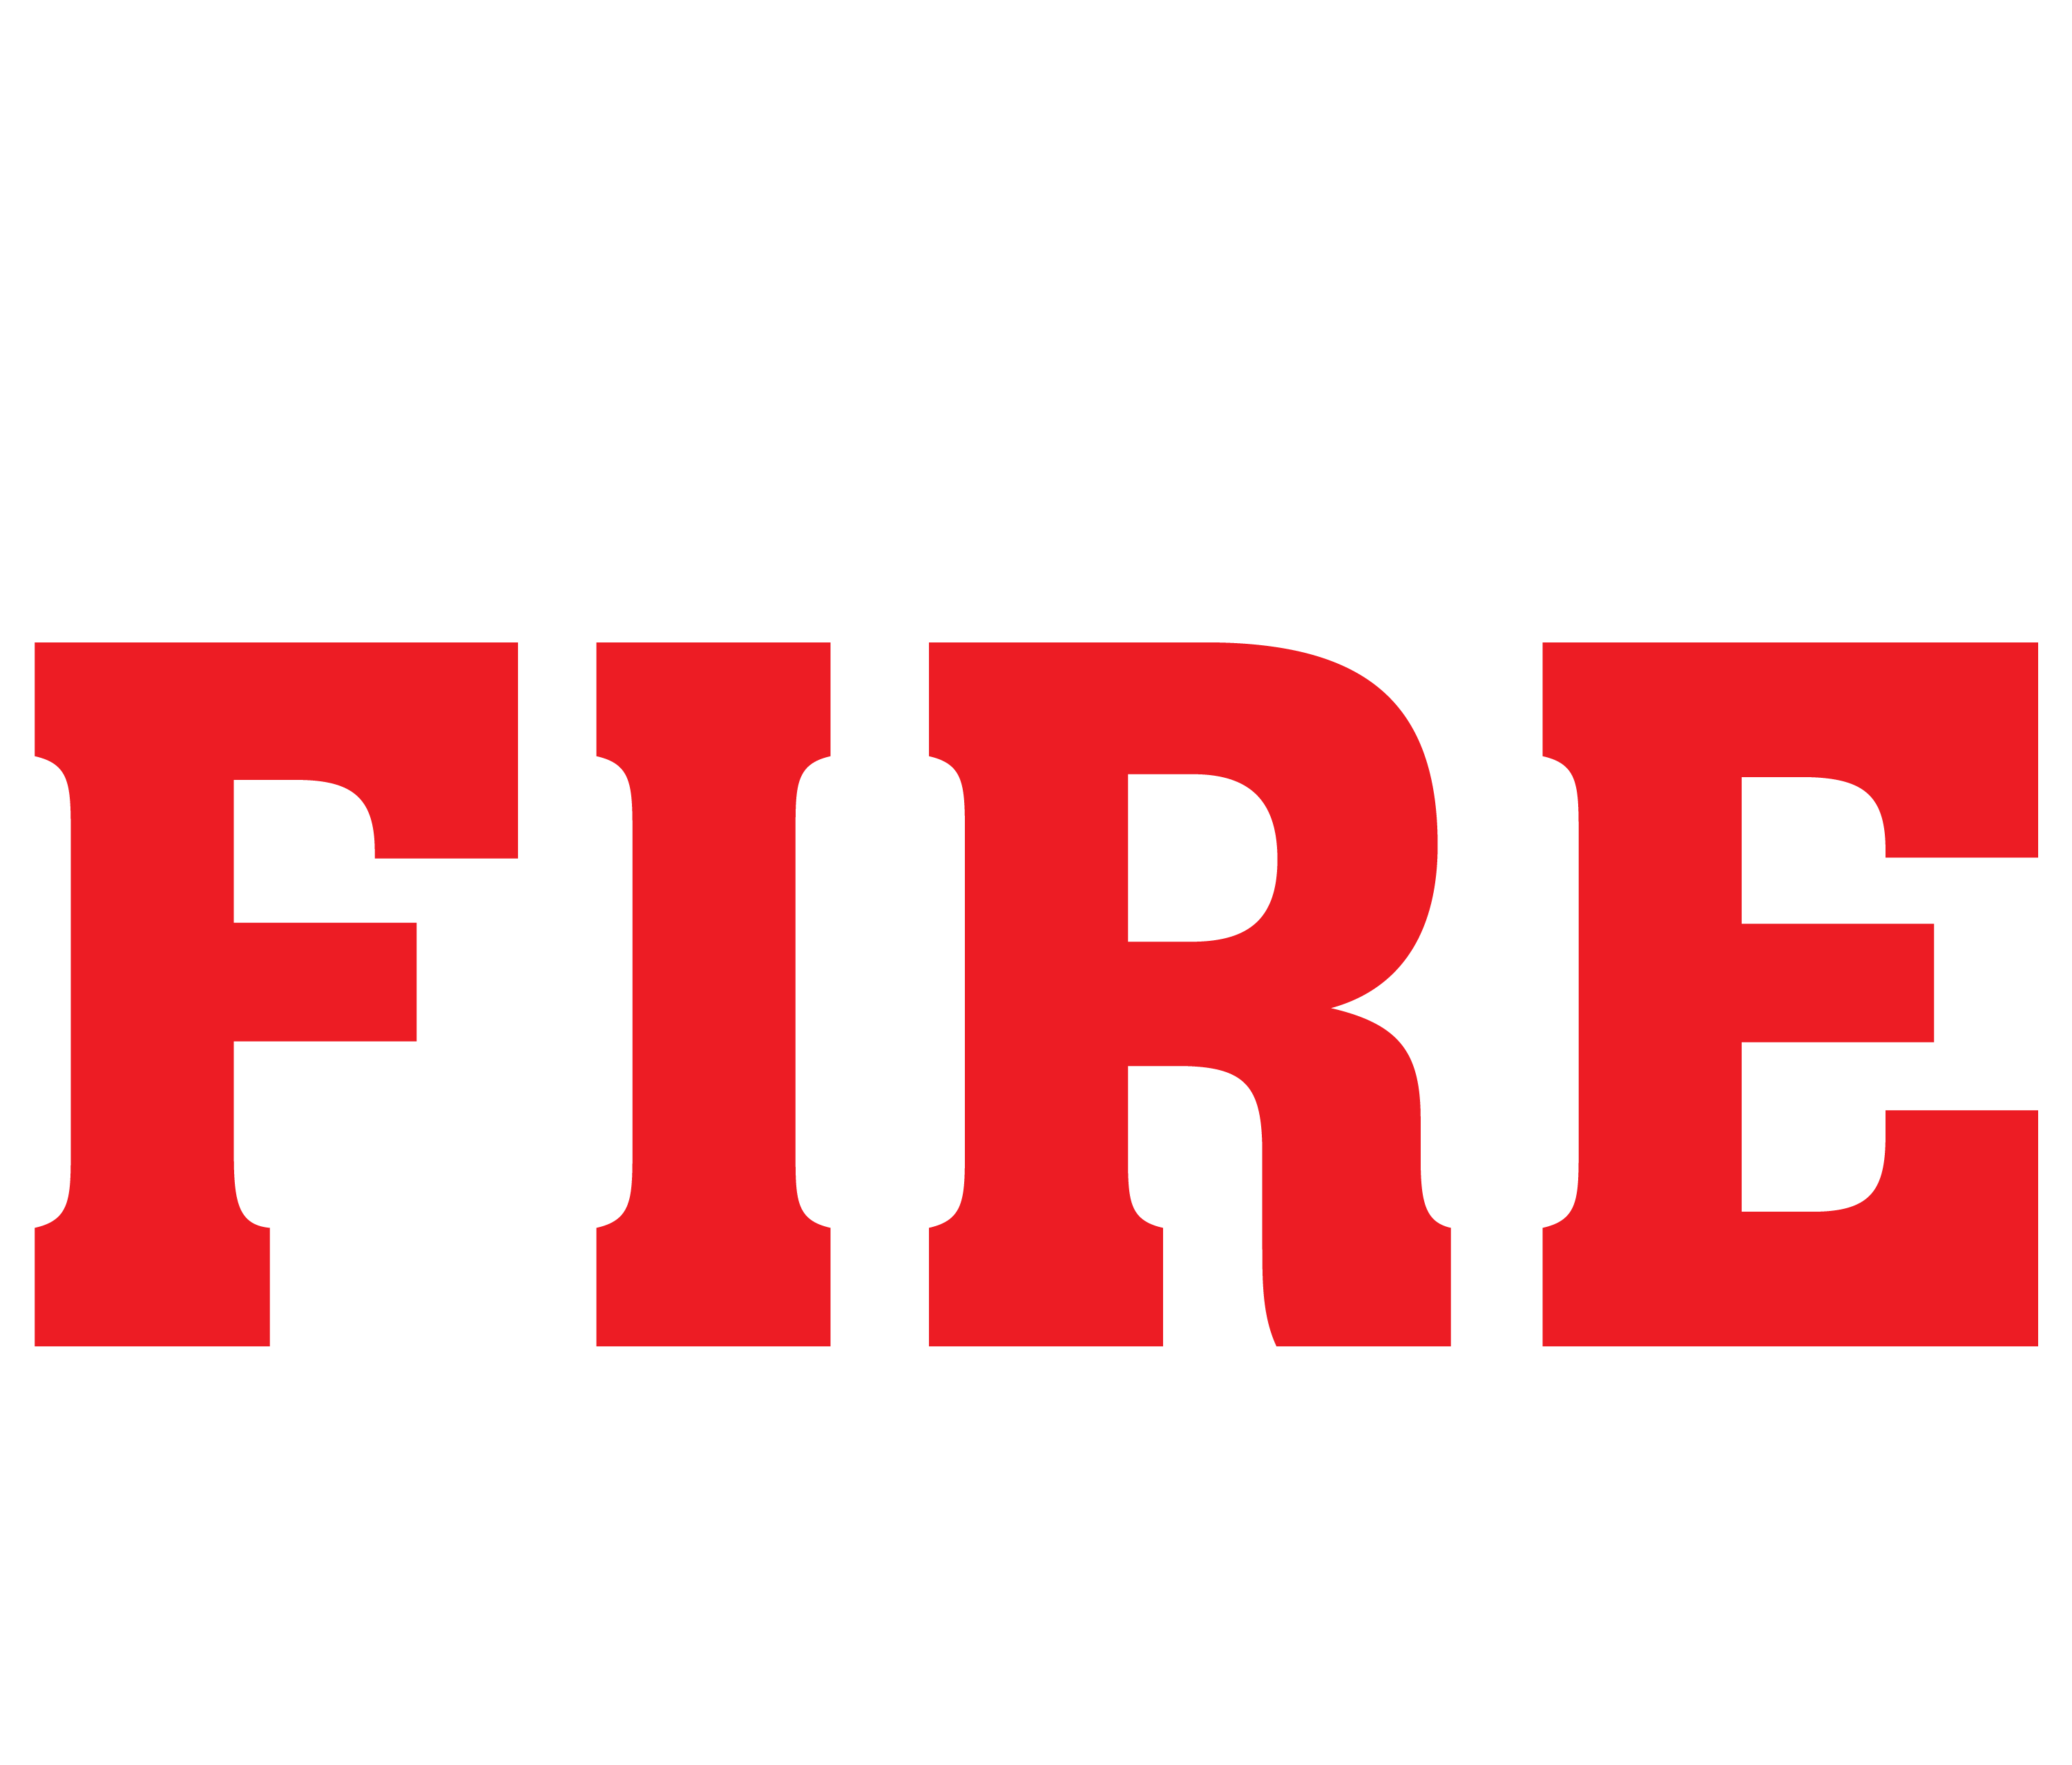 PALM SPRINGS FIRE